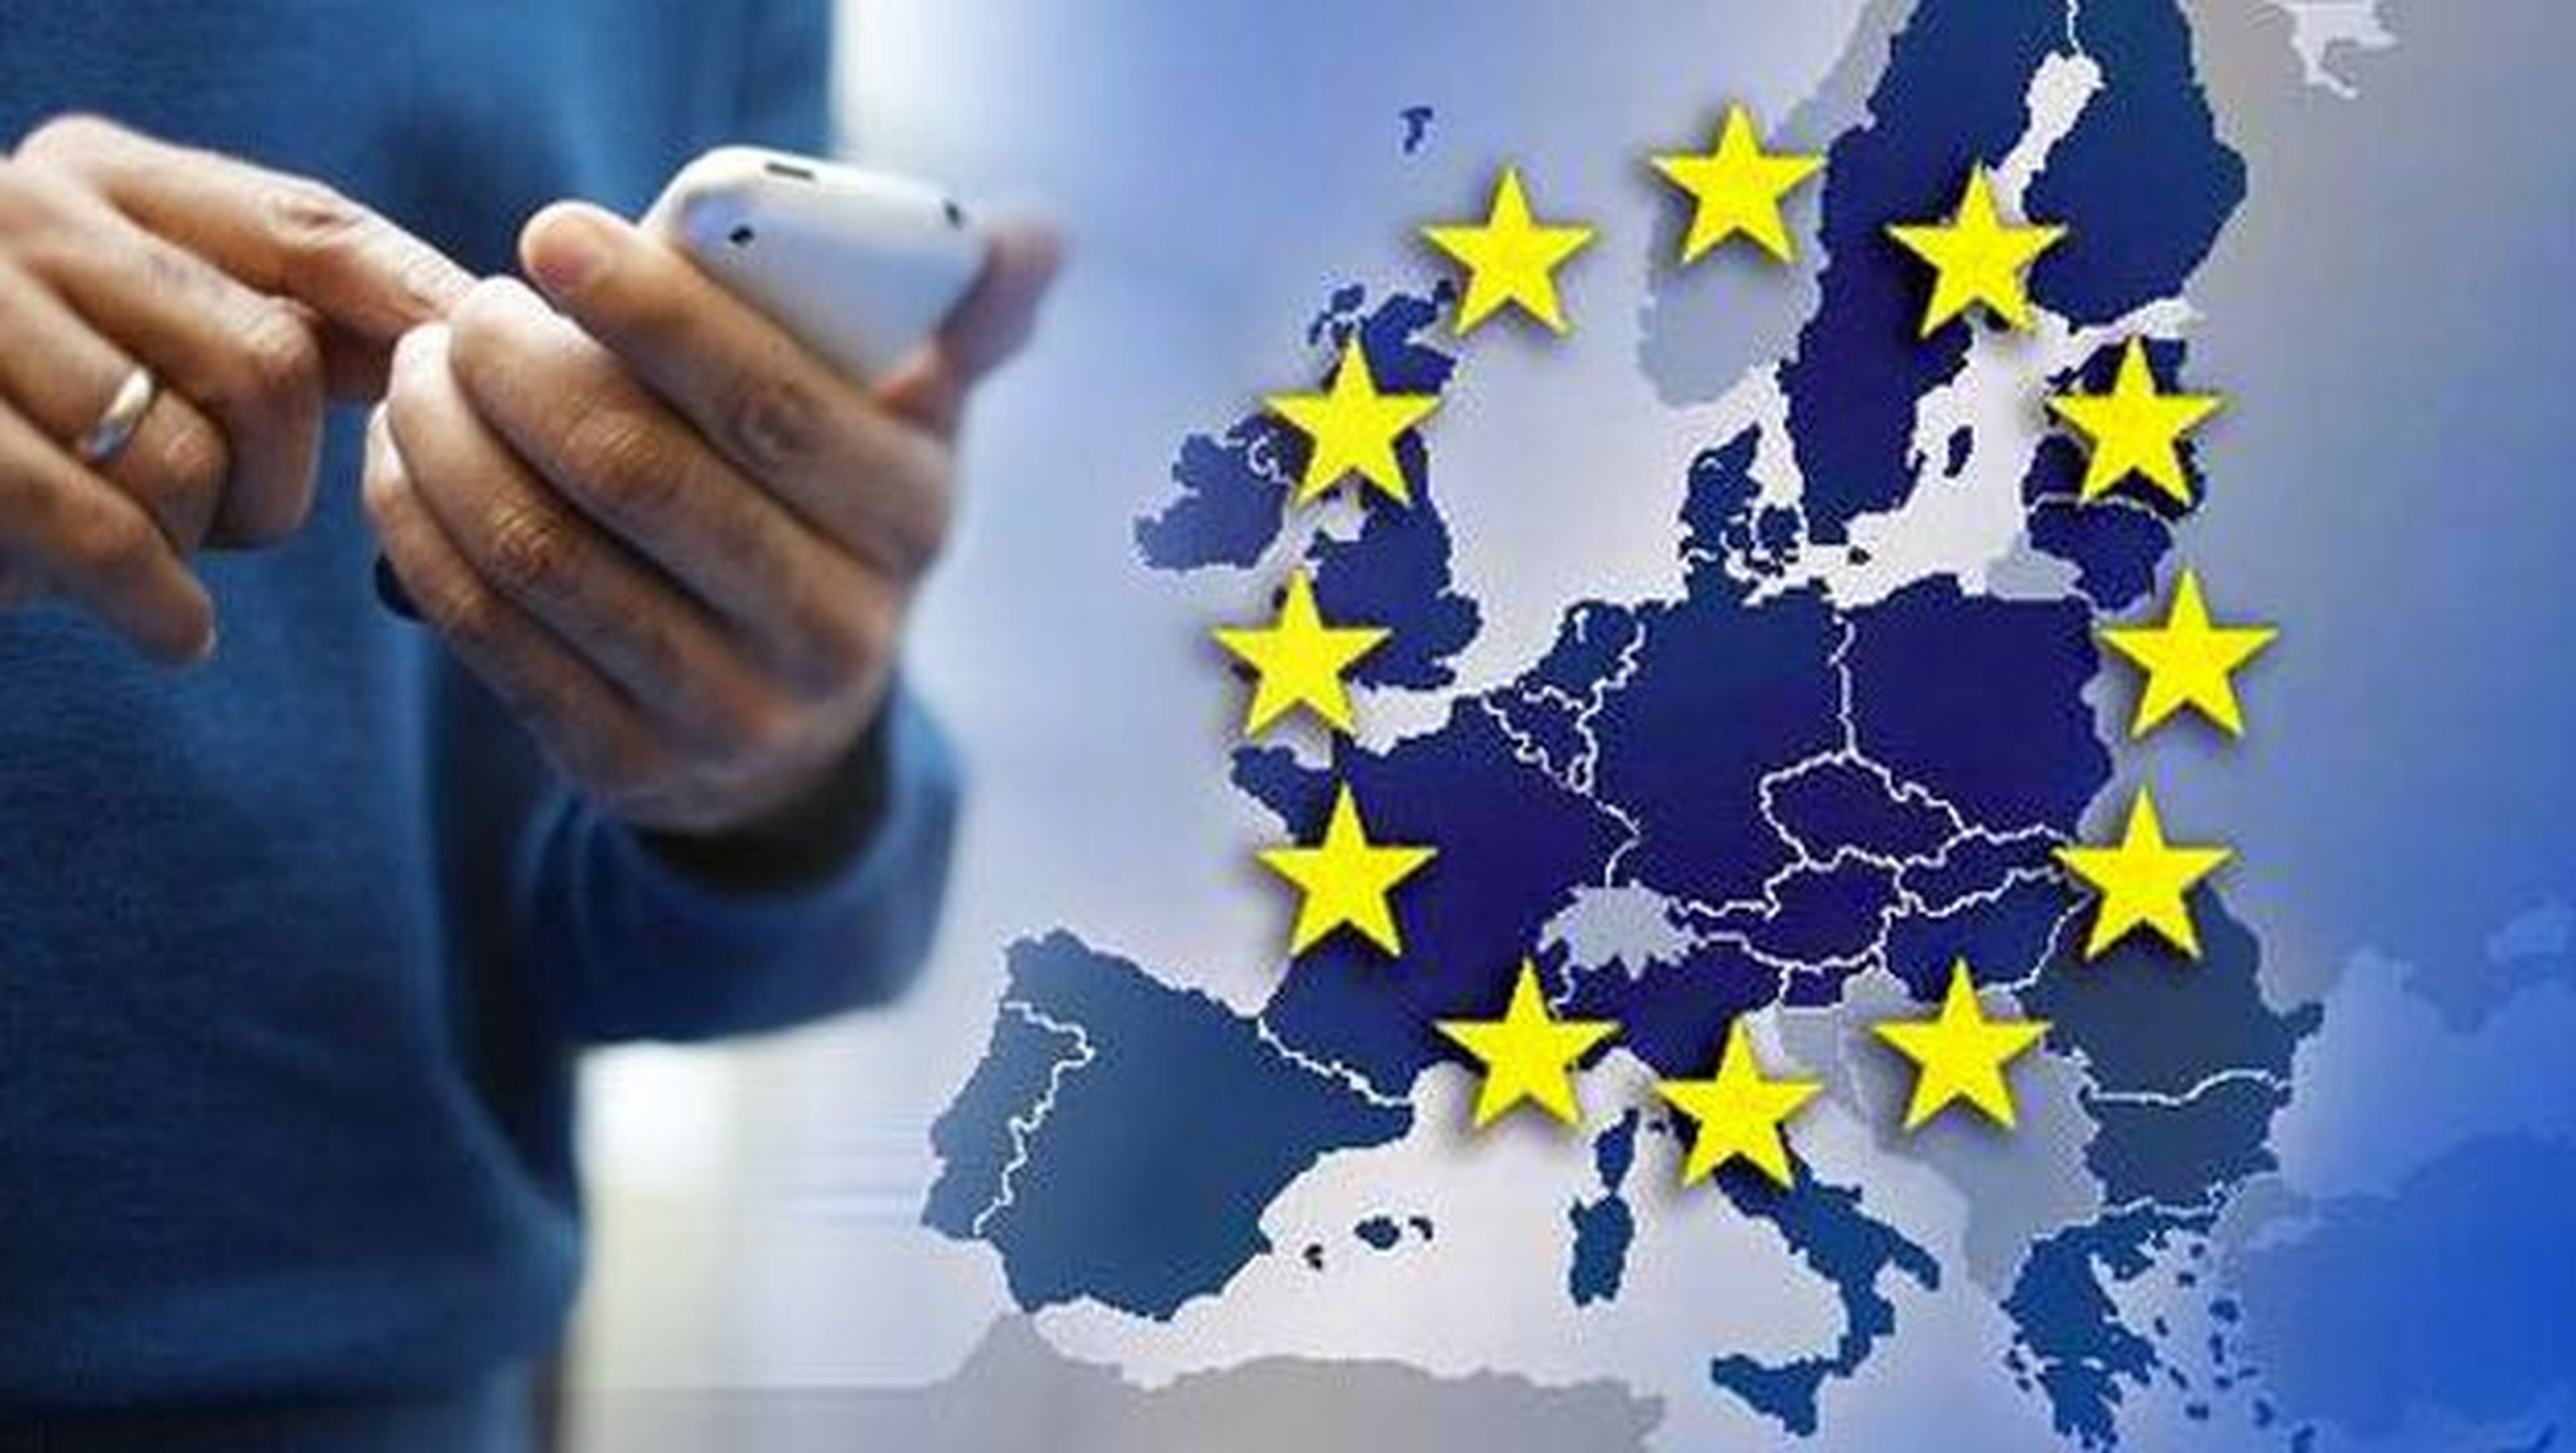 roaming gratis Europa se queda 100 minutos 100 MB 50 SMS